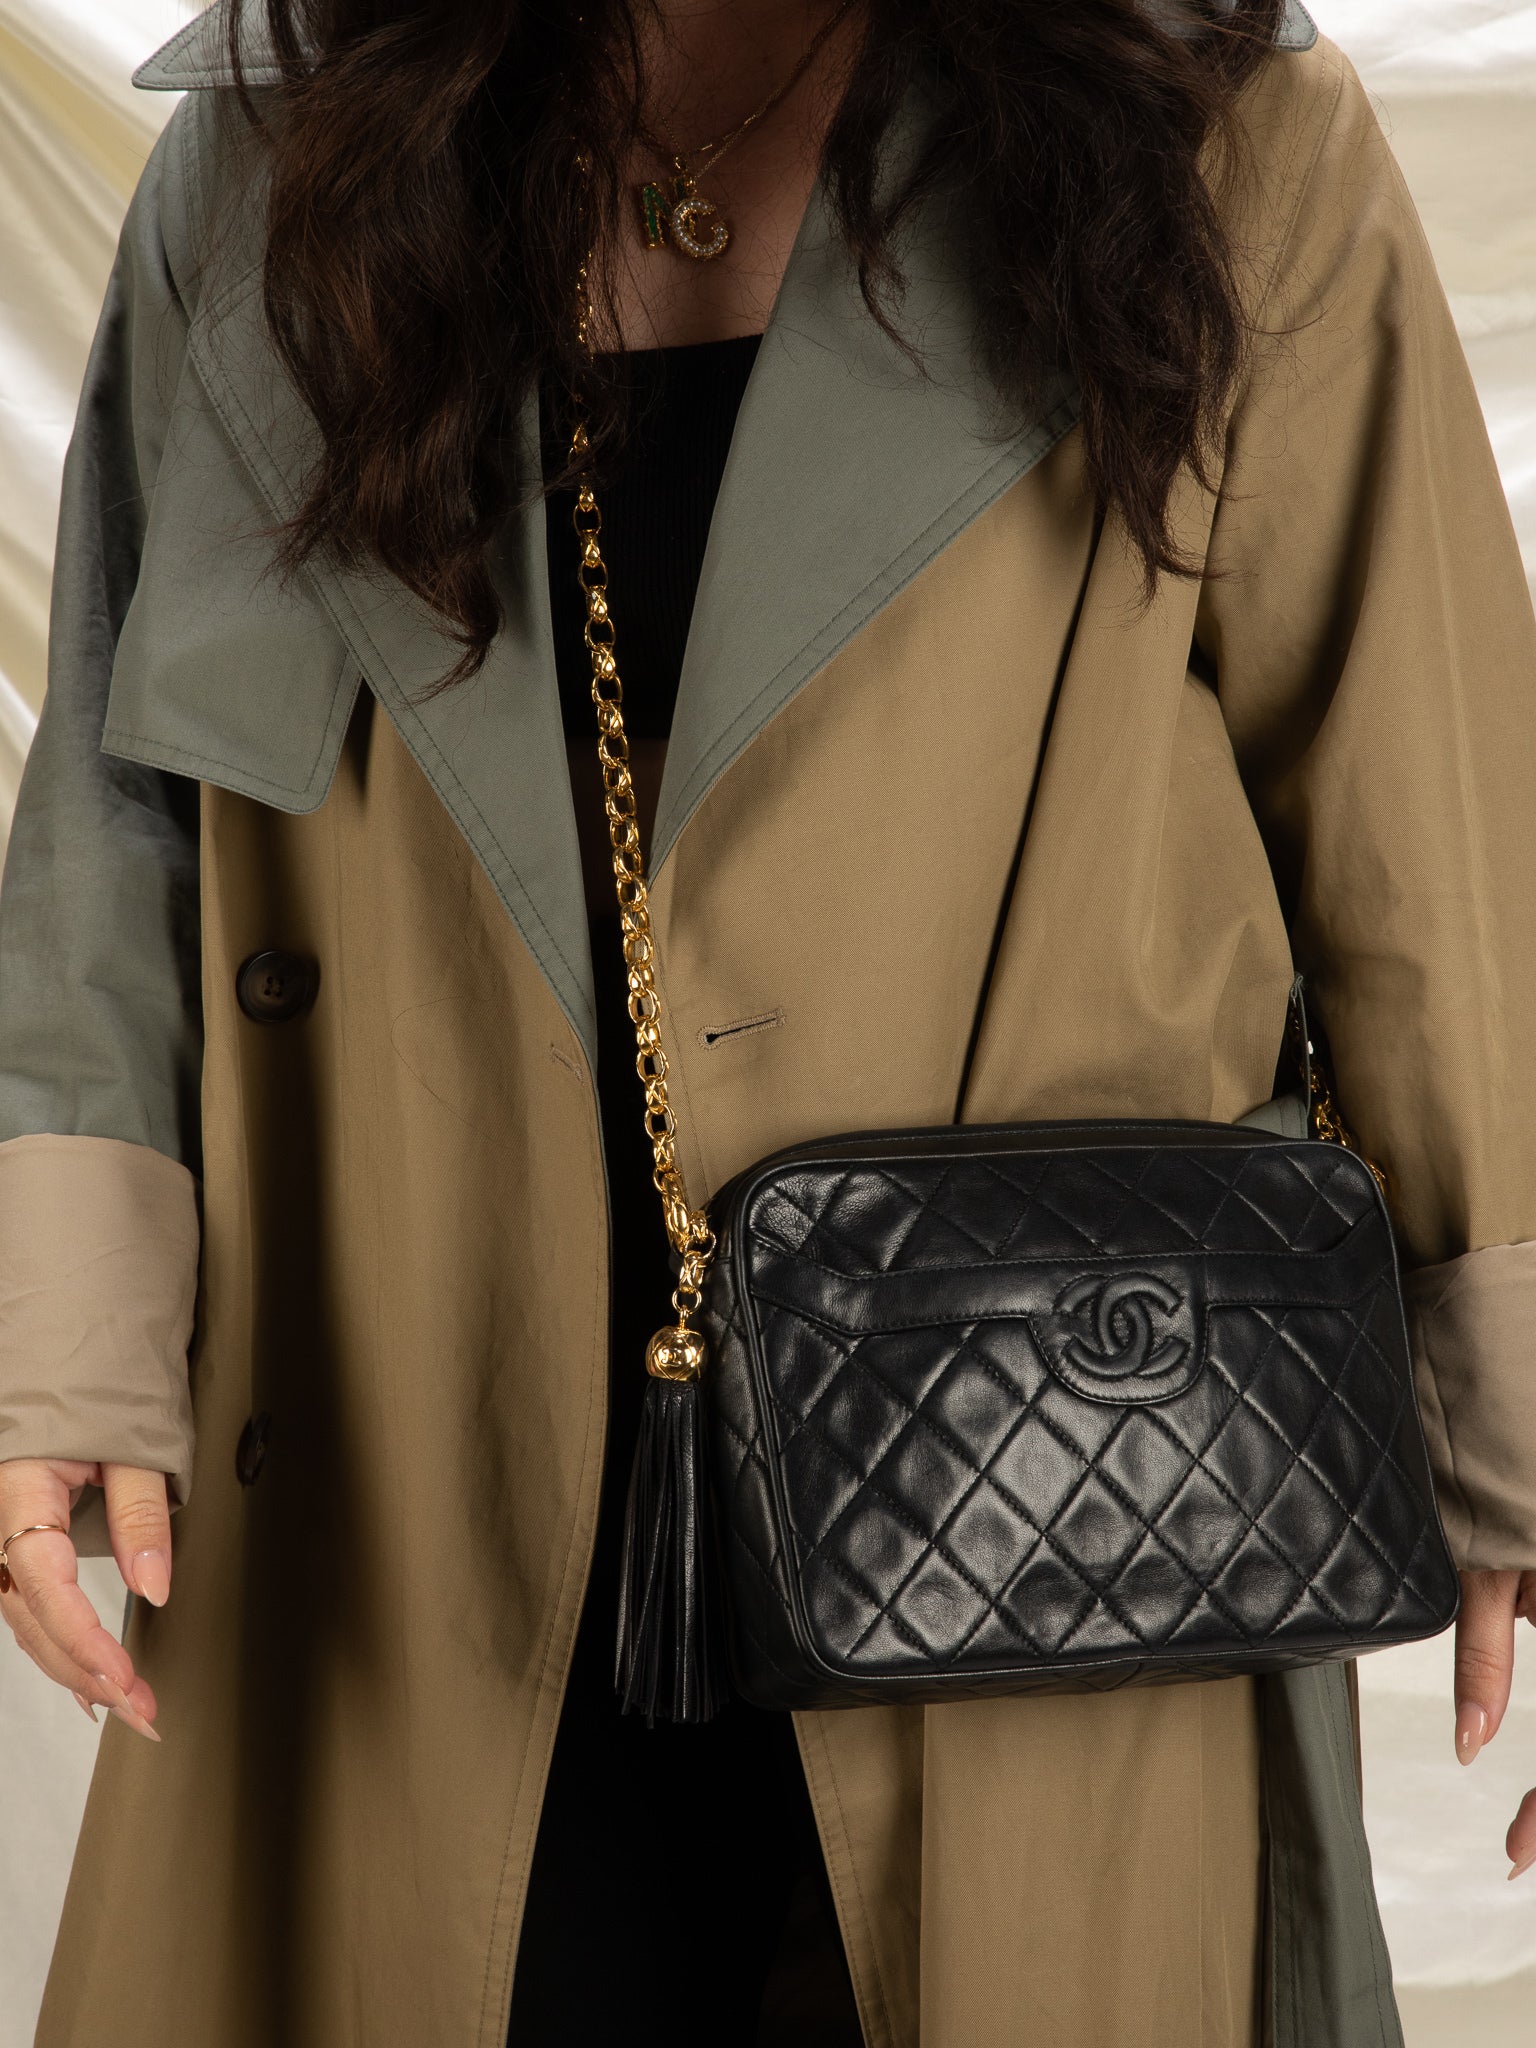 Chanel Lambskin Bijoux Crossbody Bag